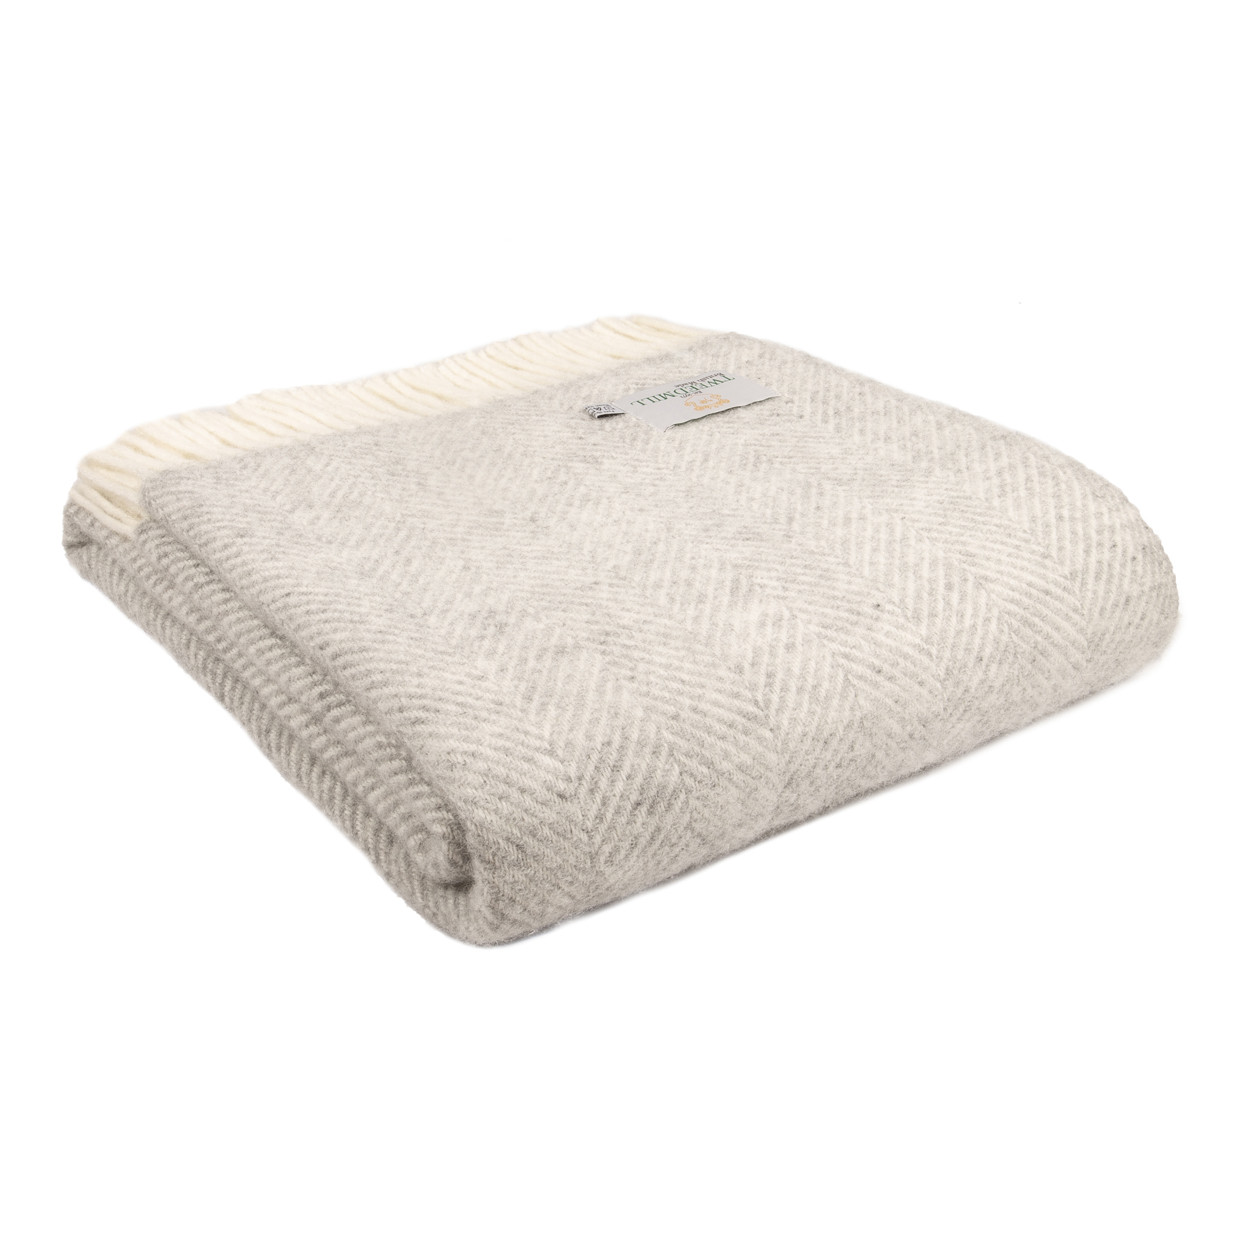 Tweedmill 'Fishbone' Pure New Wool Blanket Cream & Hazel 